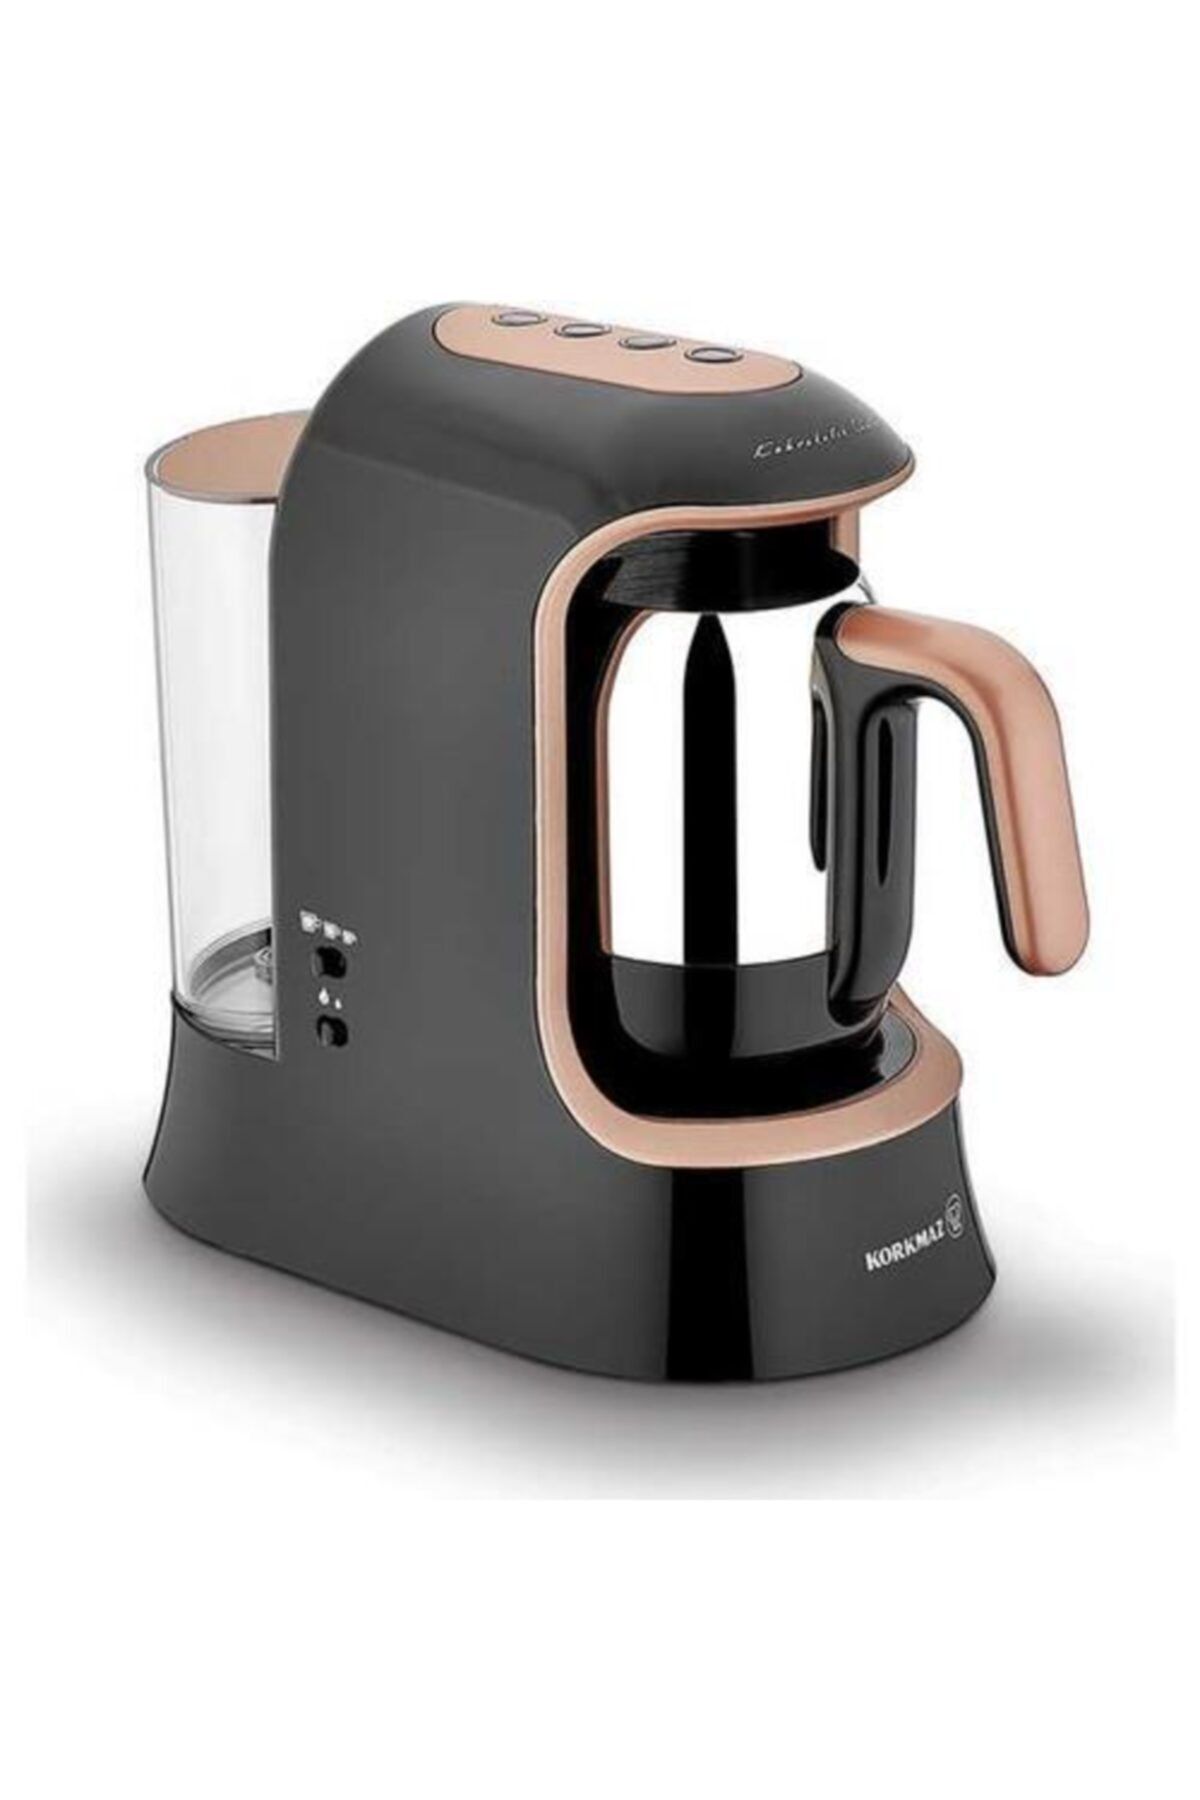 KORKMAZ Kahvekolik Aqua Siyah Rosegold Otomatik Kahve Makinesi A862-02